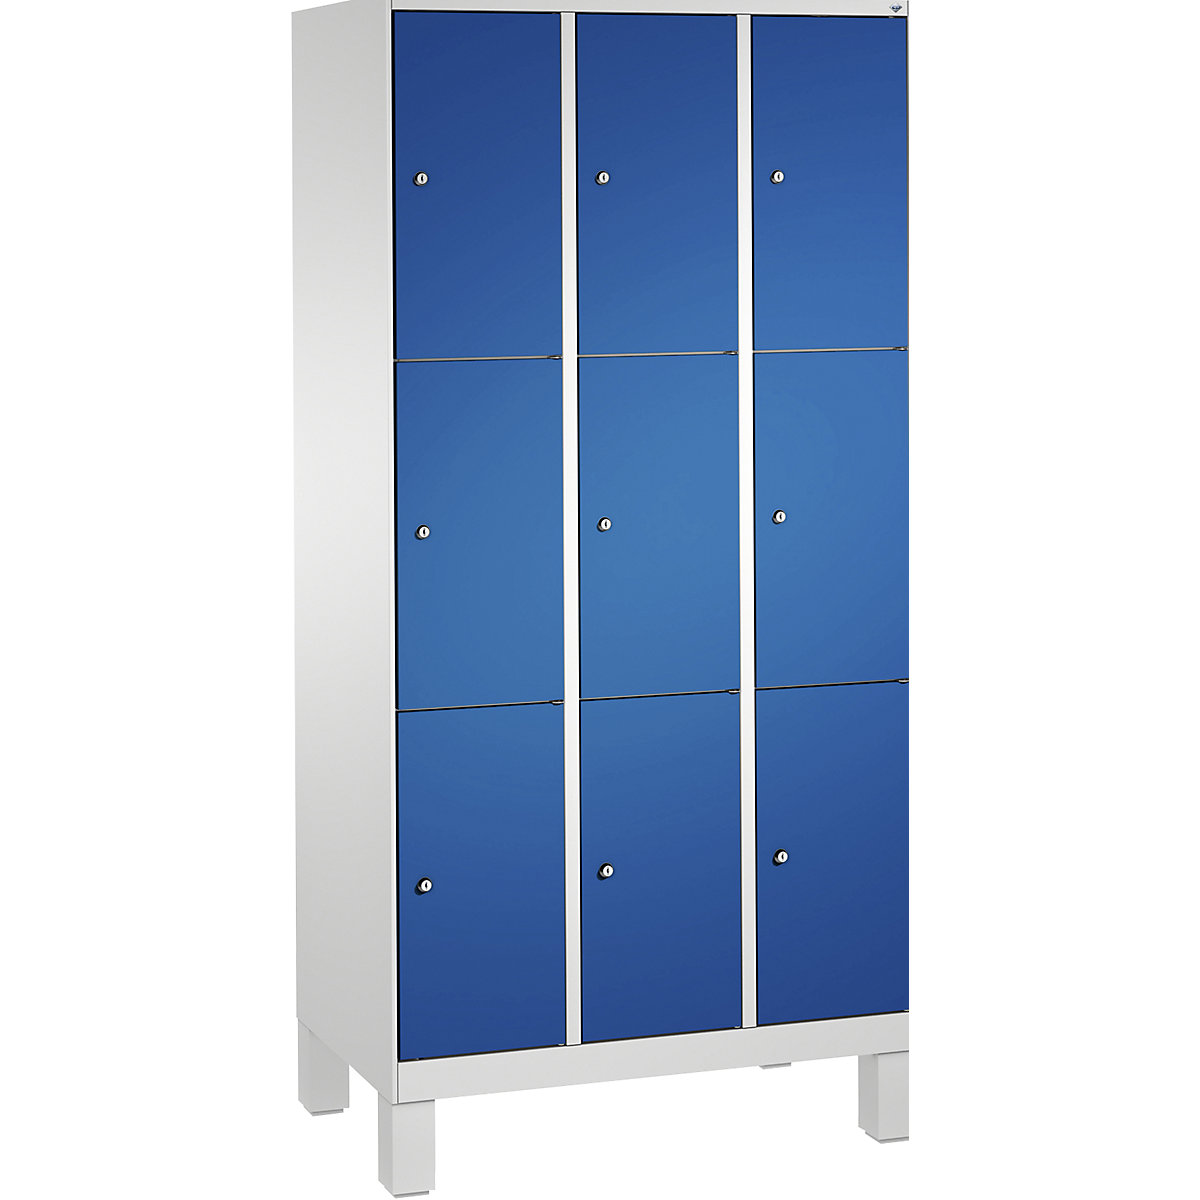 EVOLO locker unit, with feet – C+P, 3 compartments, 3 shelf compartments each, compartment width 300 mm, light grey / gentian blue-14